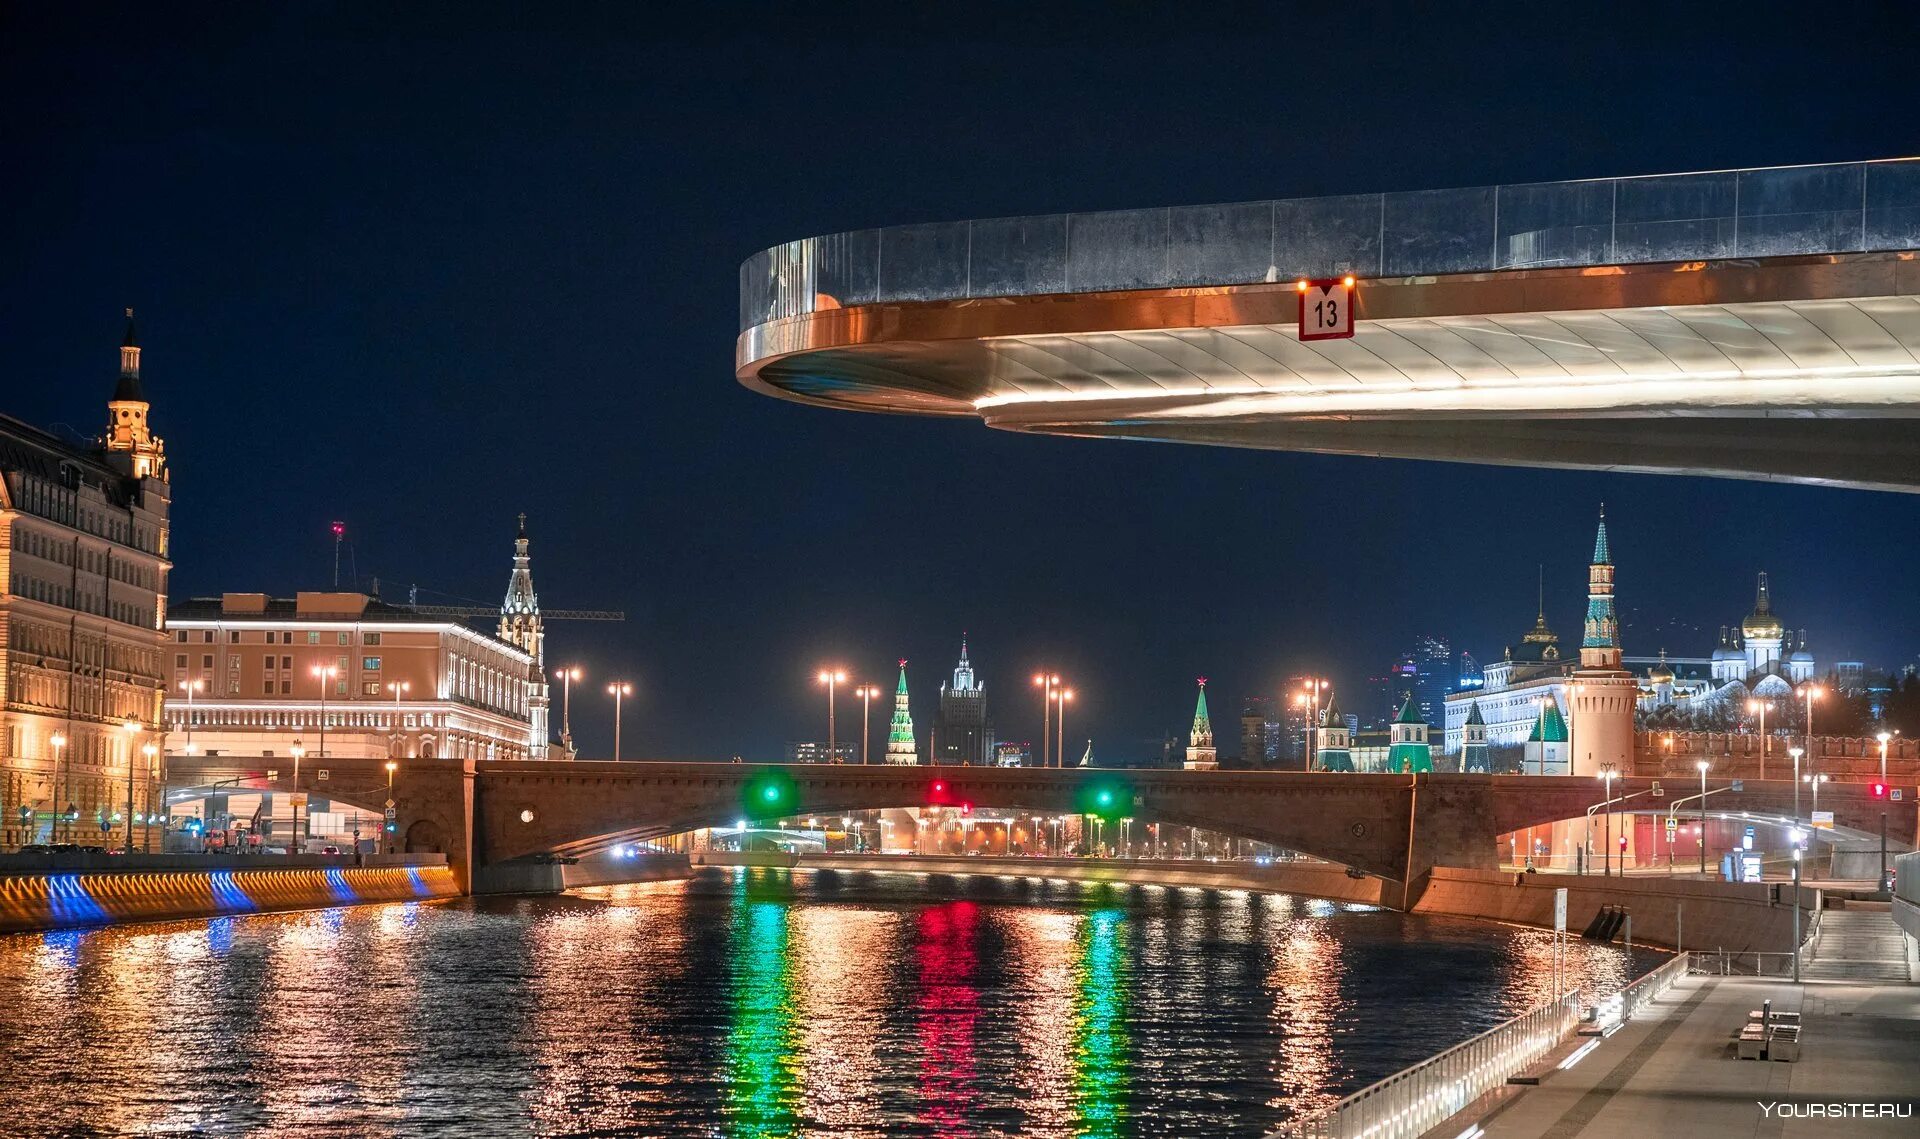 Парк Зарчдье папчщий мост. Москва парящий мост Зарядье. Парк Зарядье мост. Парк Зарядье парящий мост ночью. Навесной мост в москве